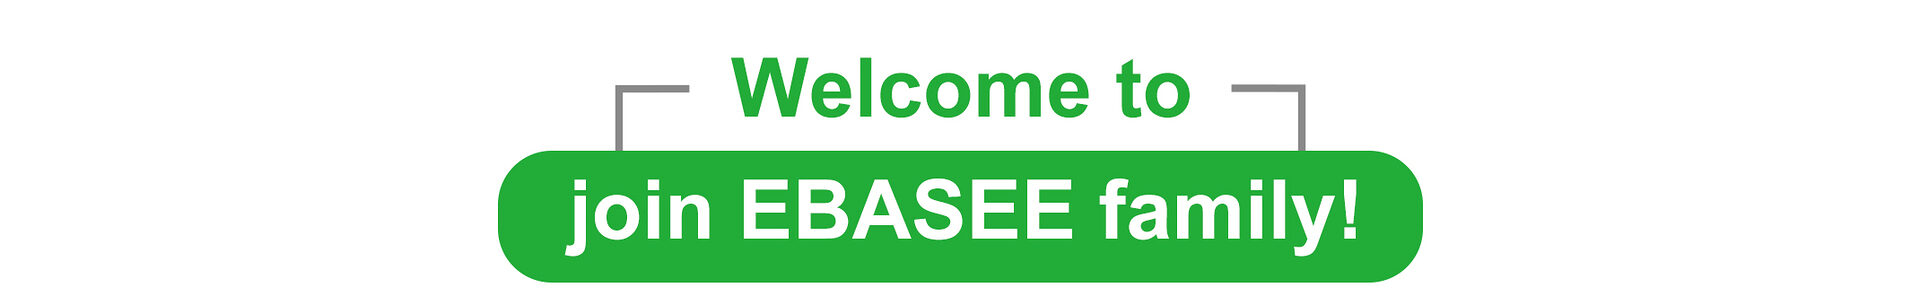 join EBASEE family